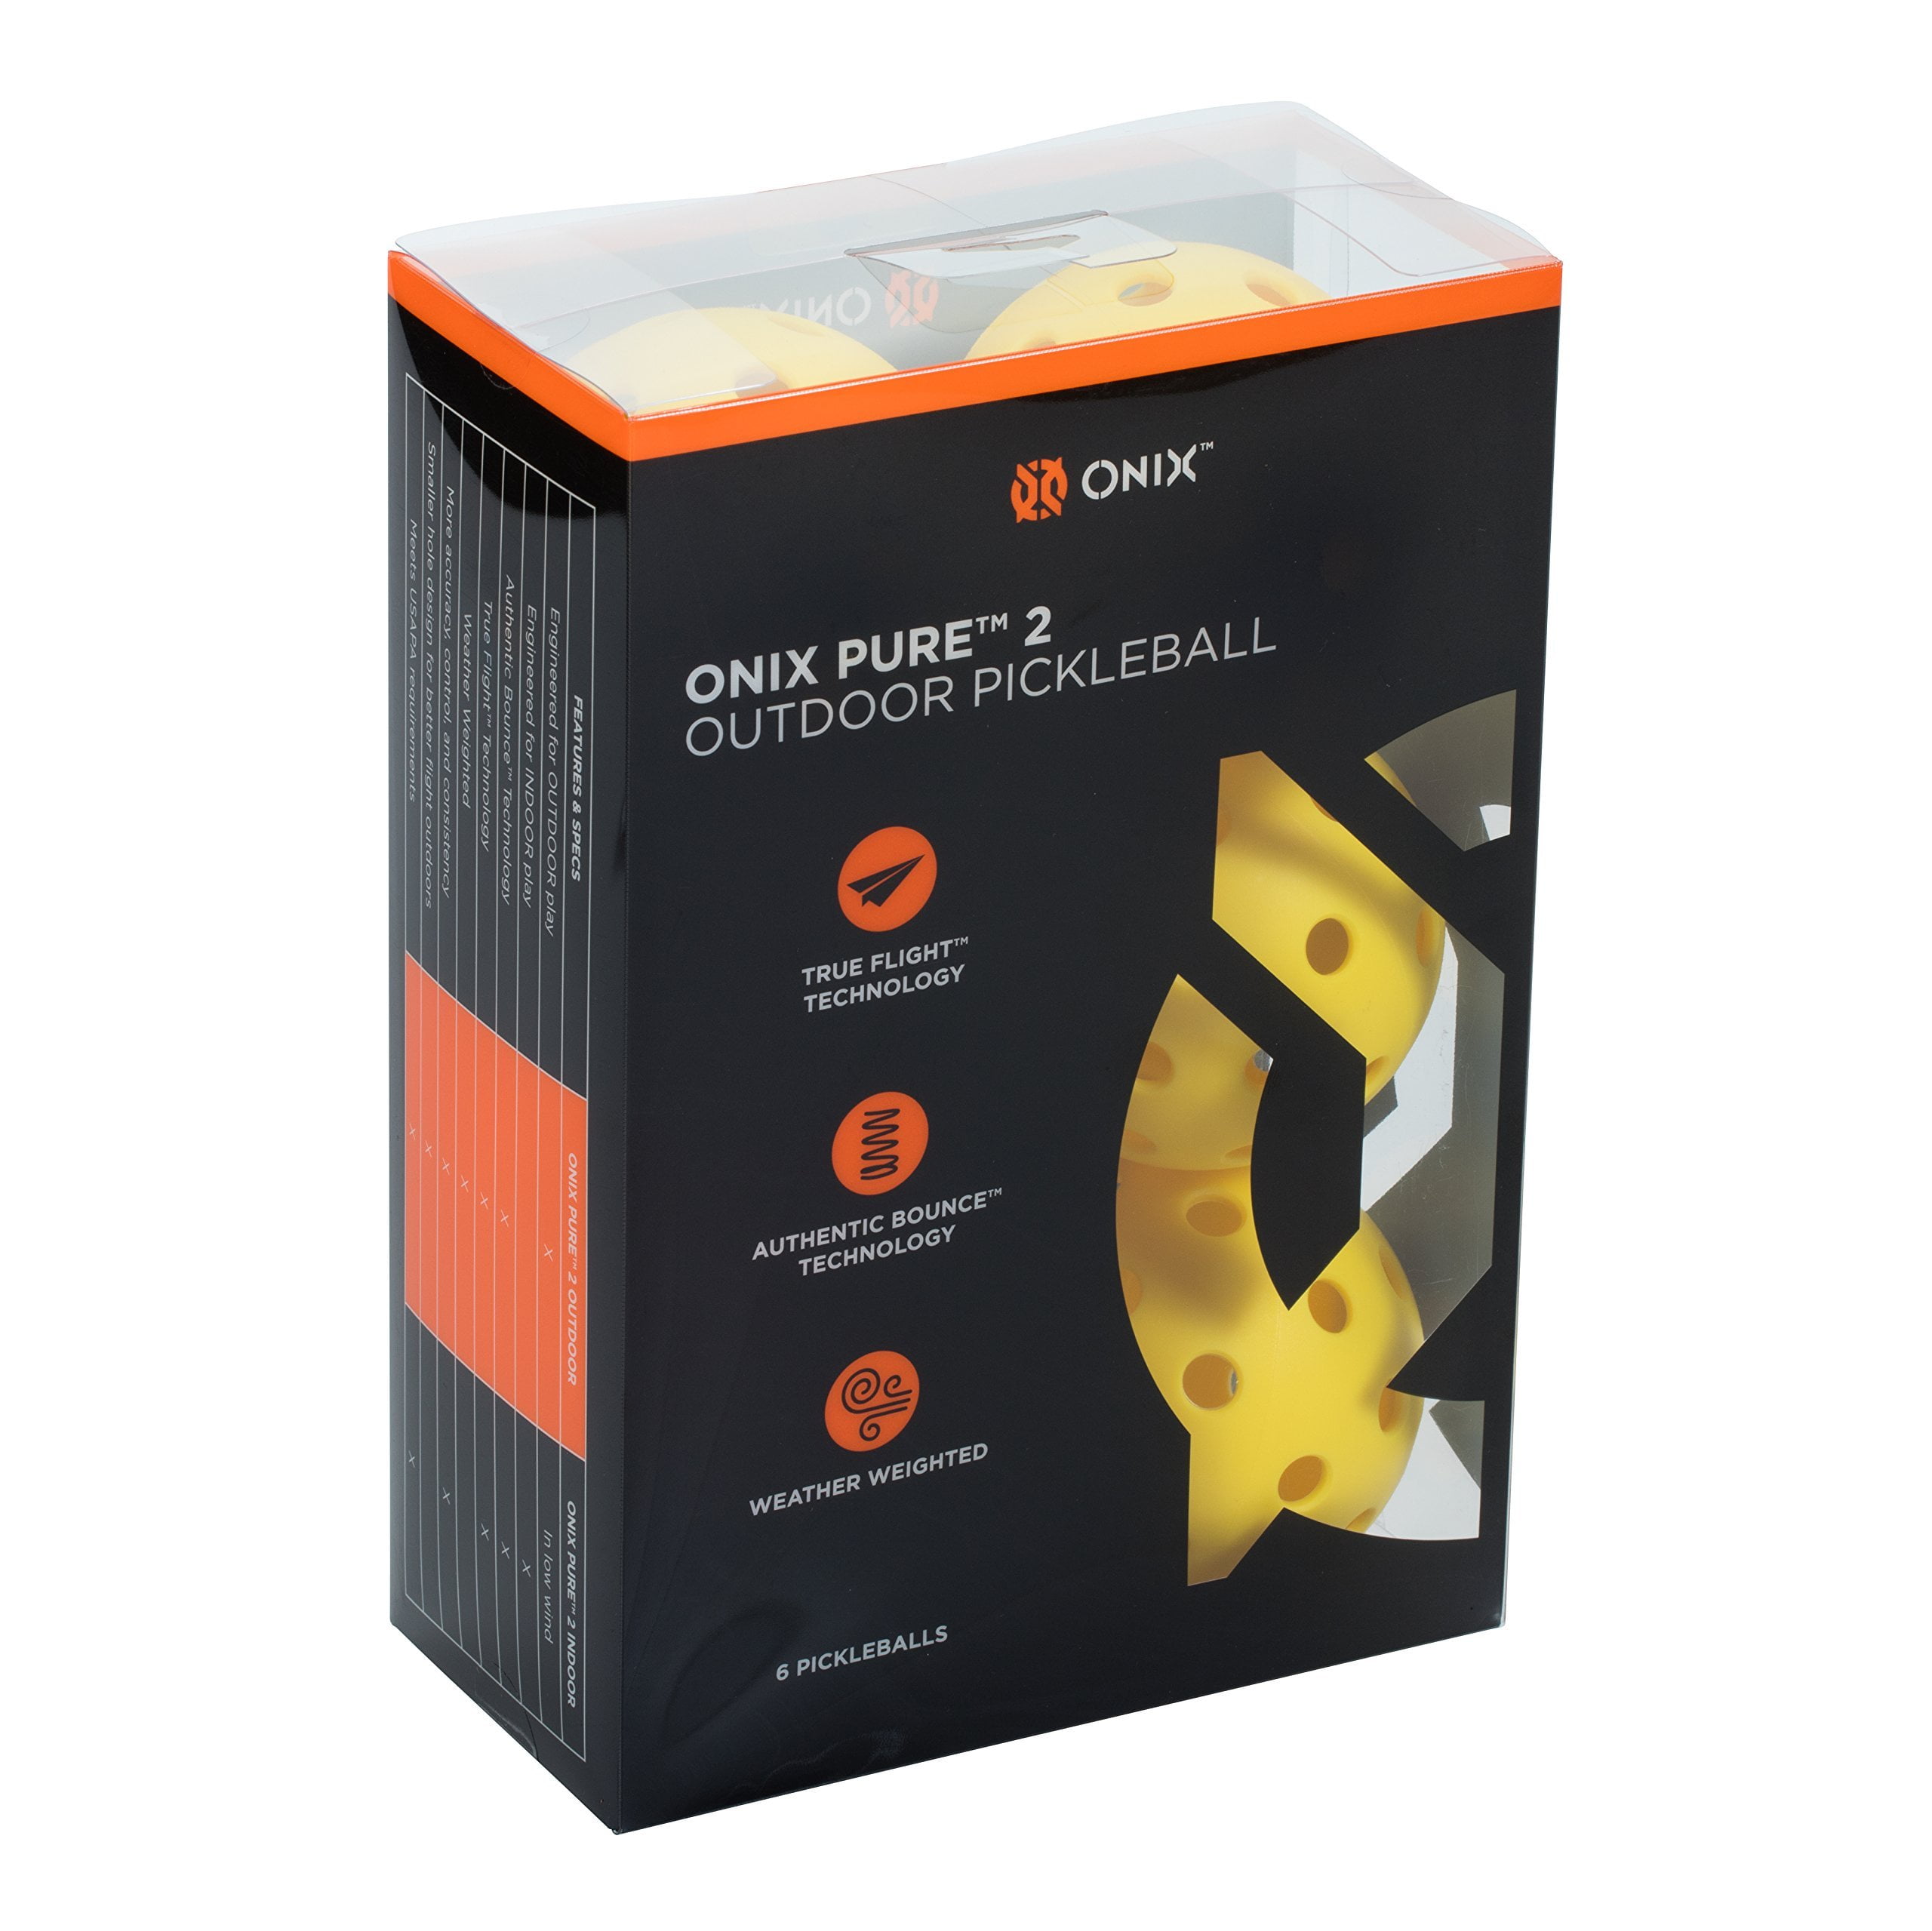 3 3 Onix Pure 2 Pickleball Balls Outdoor Pure2 Tournament Play Meets USAPA Set 